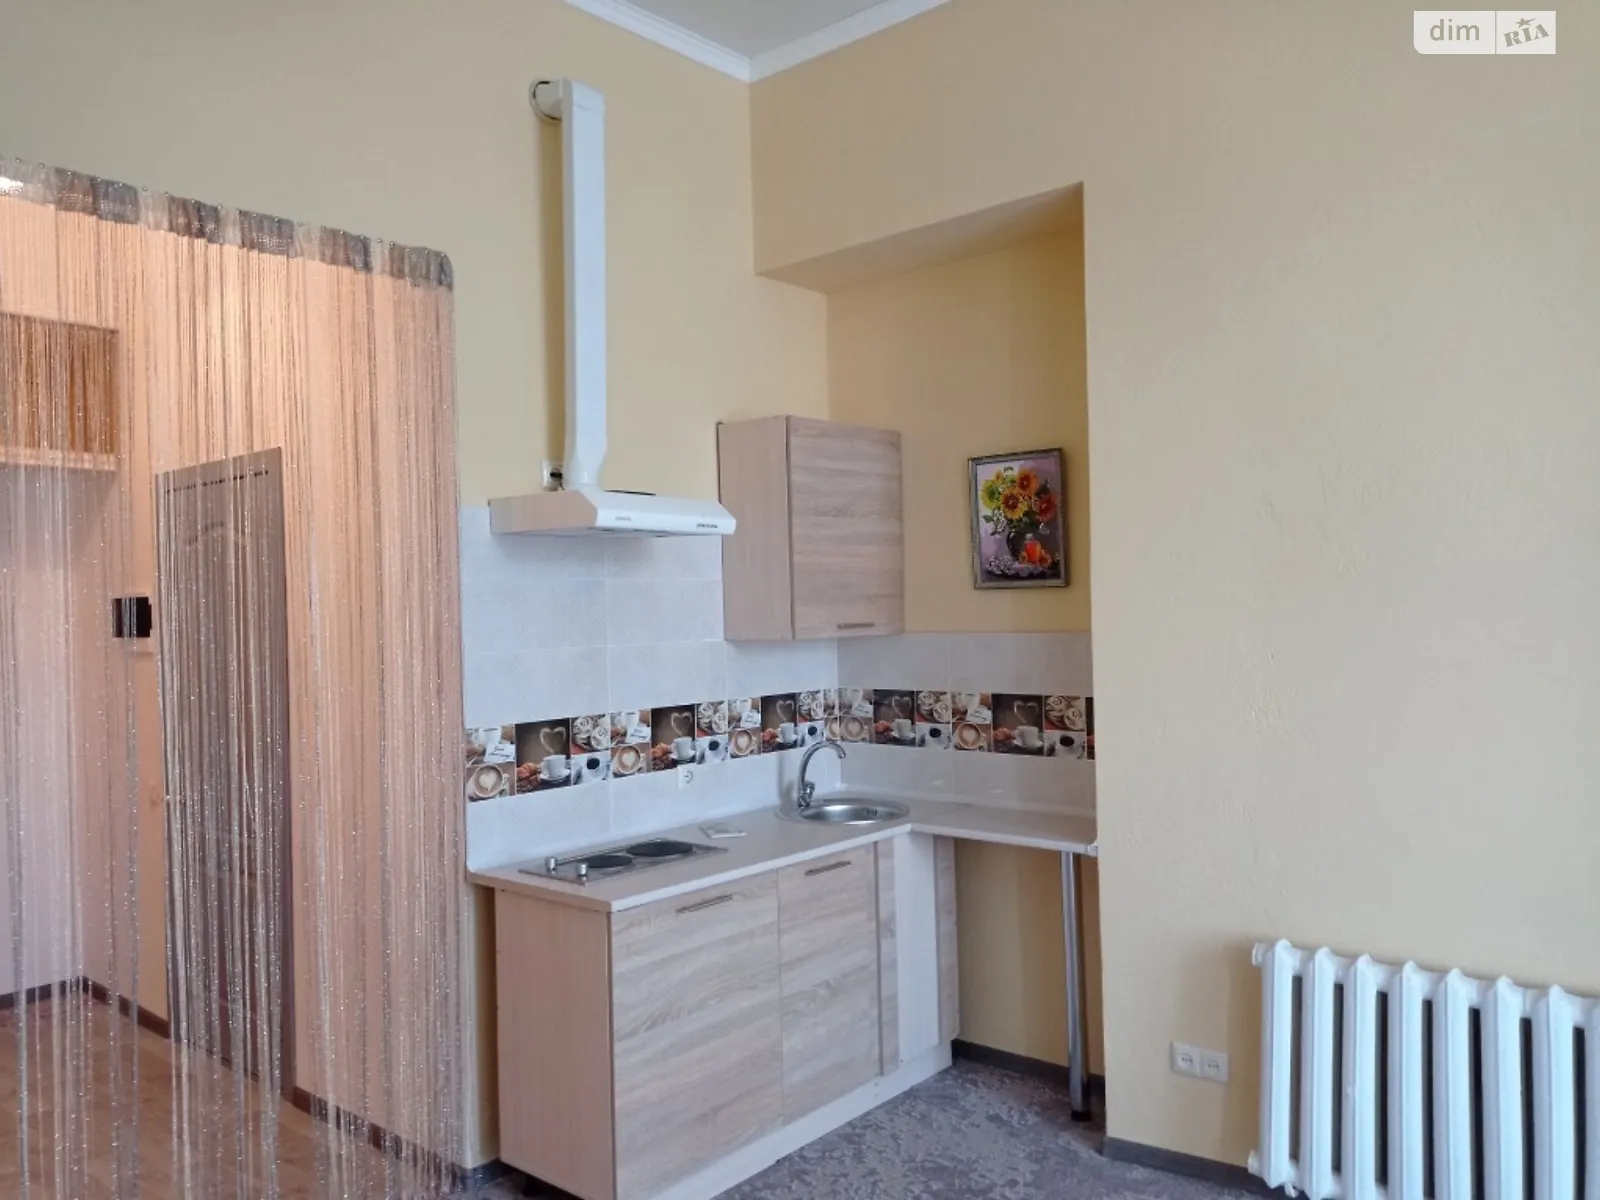 Продается комната 30 кв. м в Одессе, цена: 27000 $ - фото 1